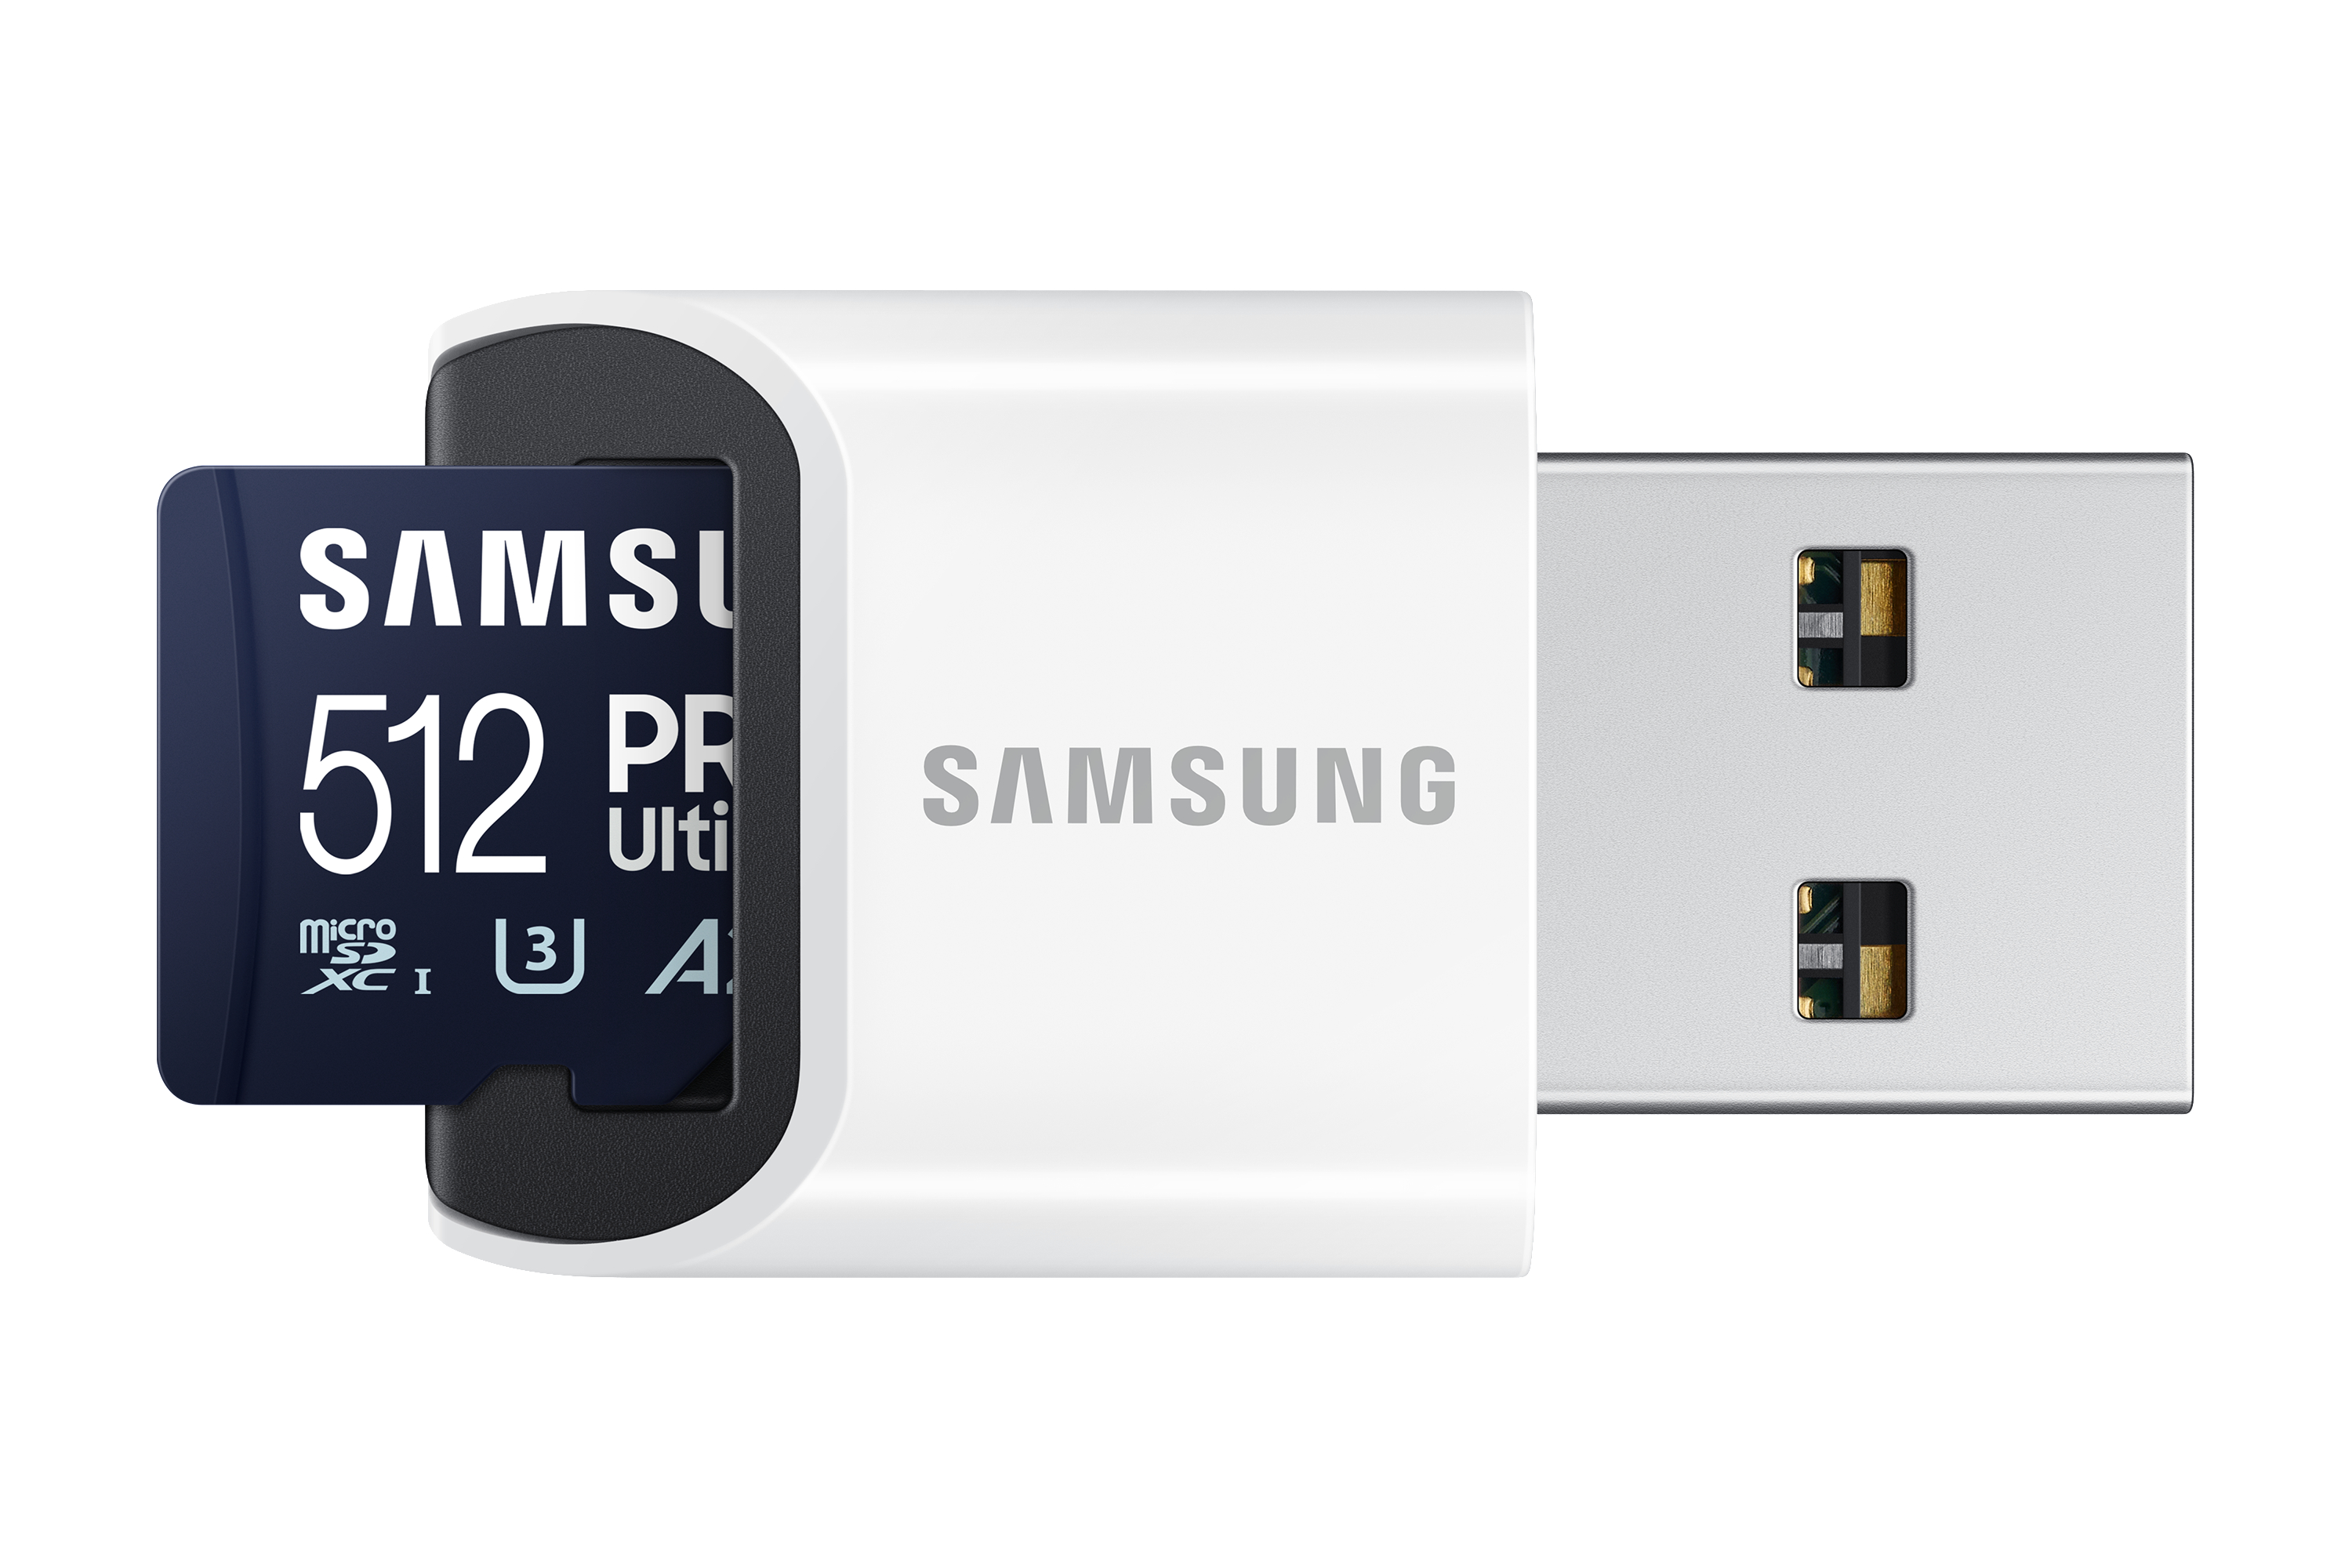 SAMSUNG PRO Ultimate, Micro-SD Speicherkarte, 512 MB/s GB, 200